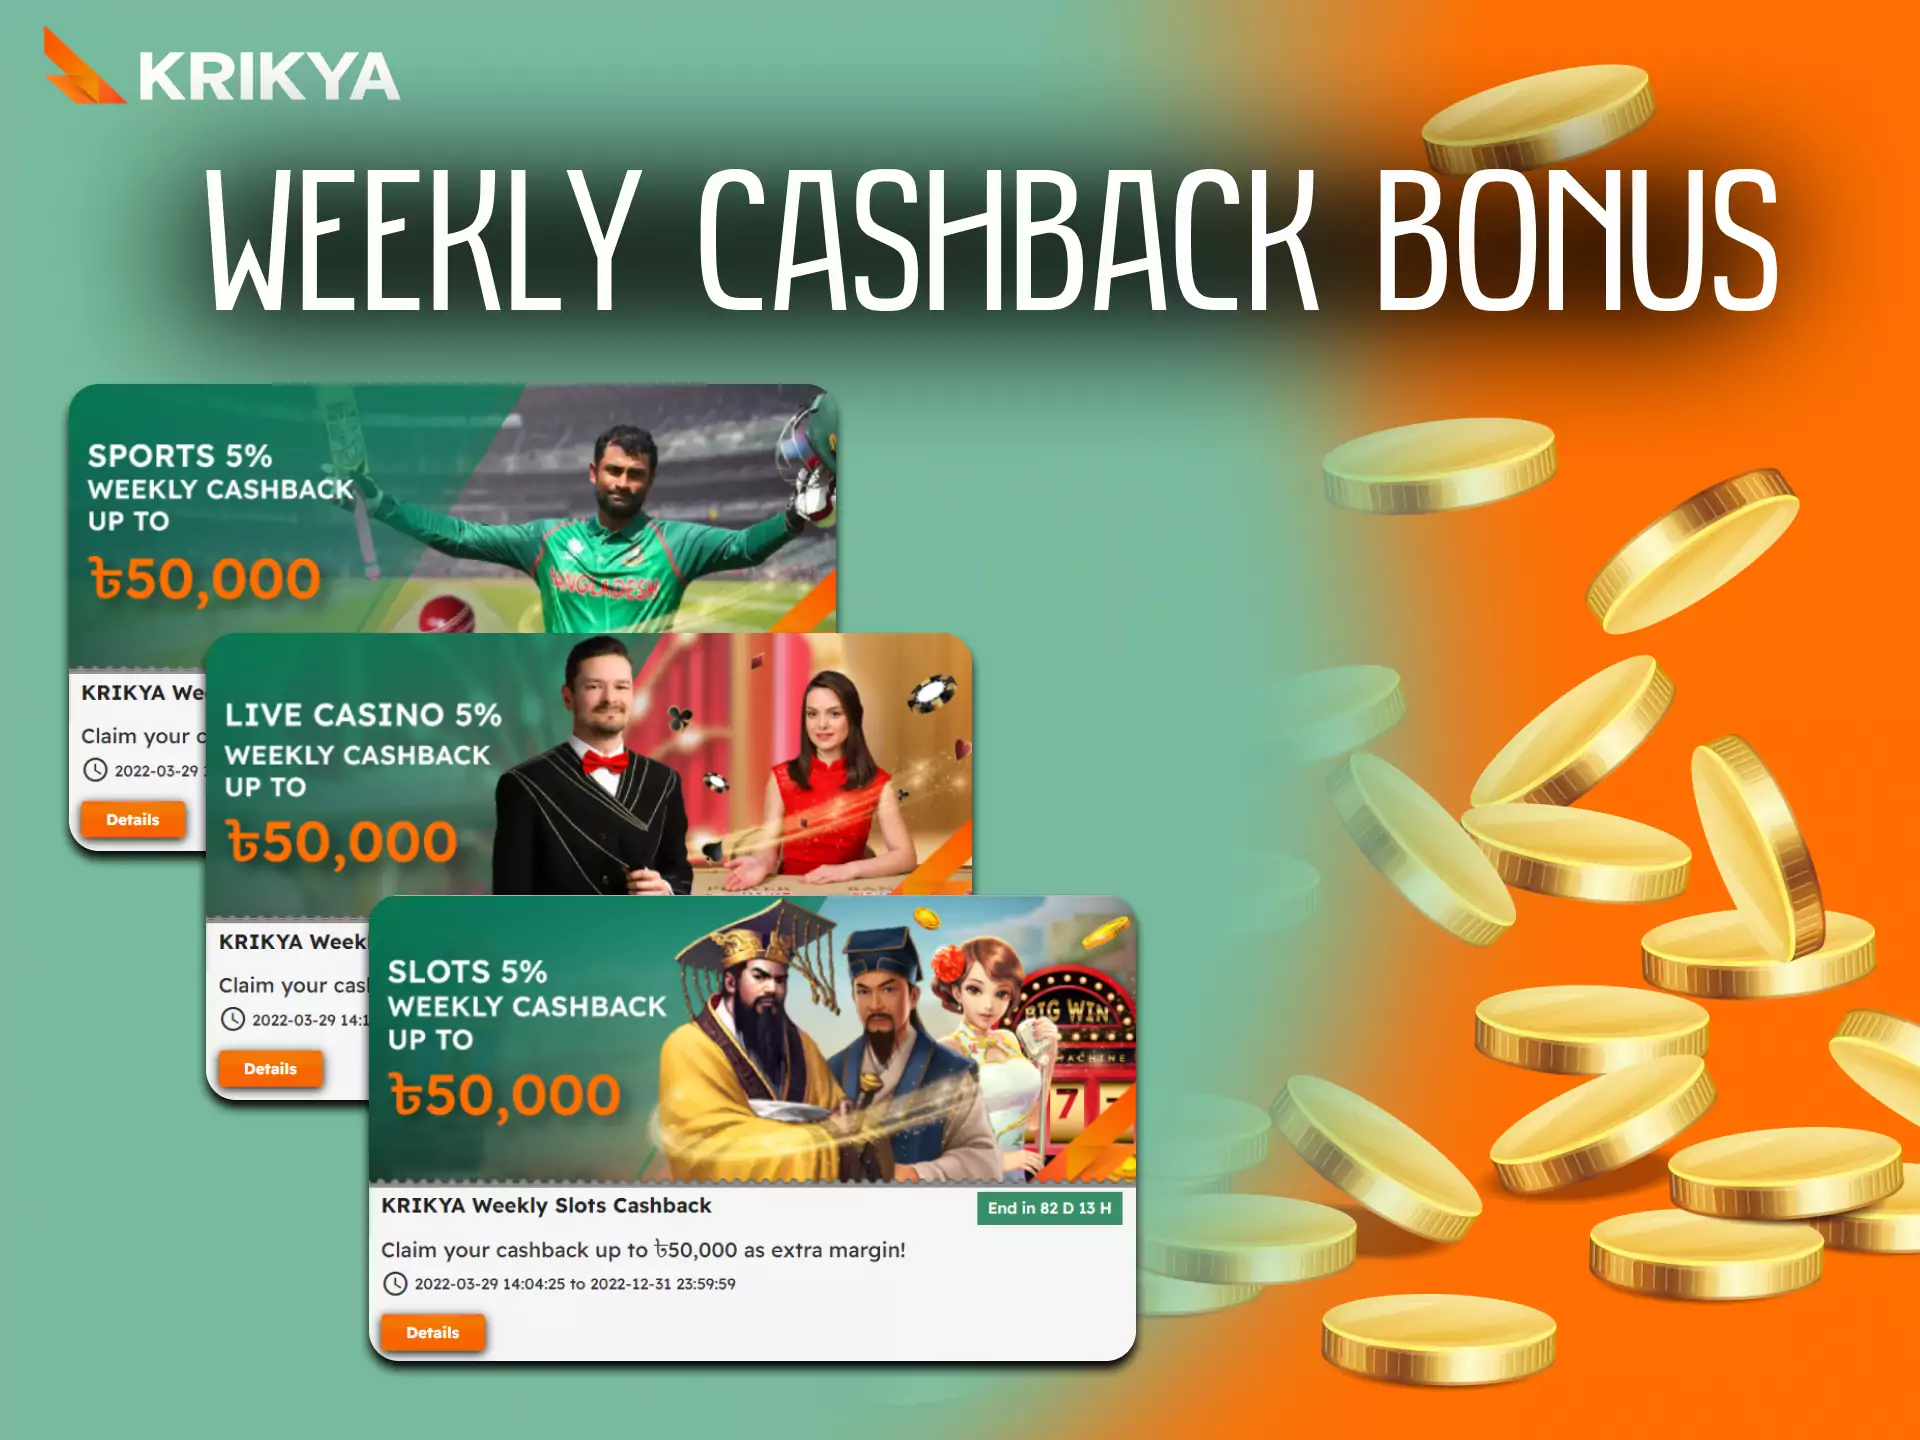 The Krikya app provides a weekly cashback bonus for players.